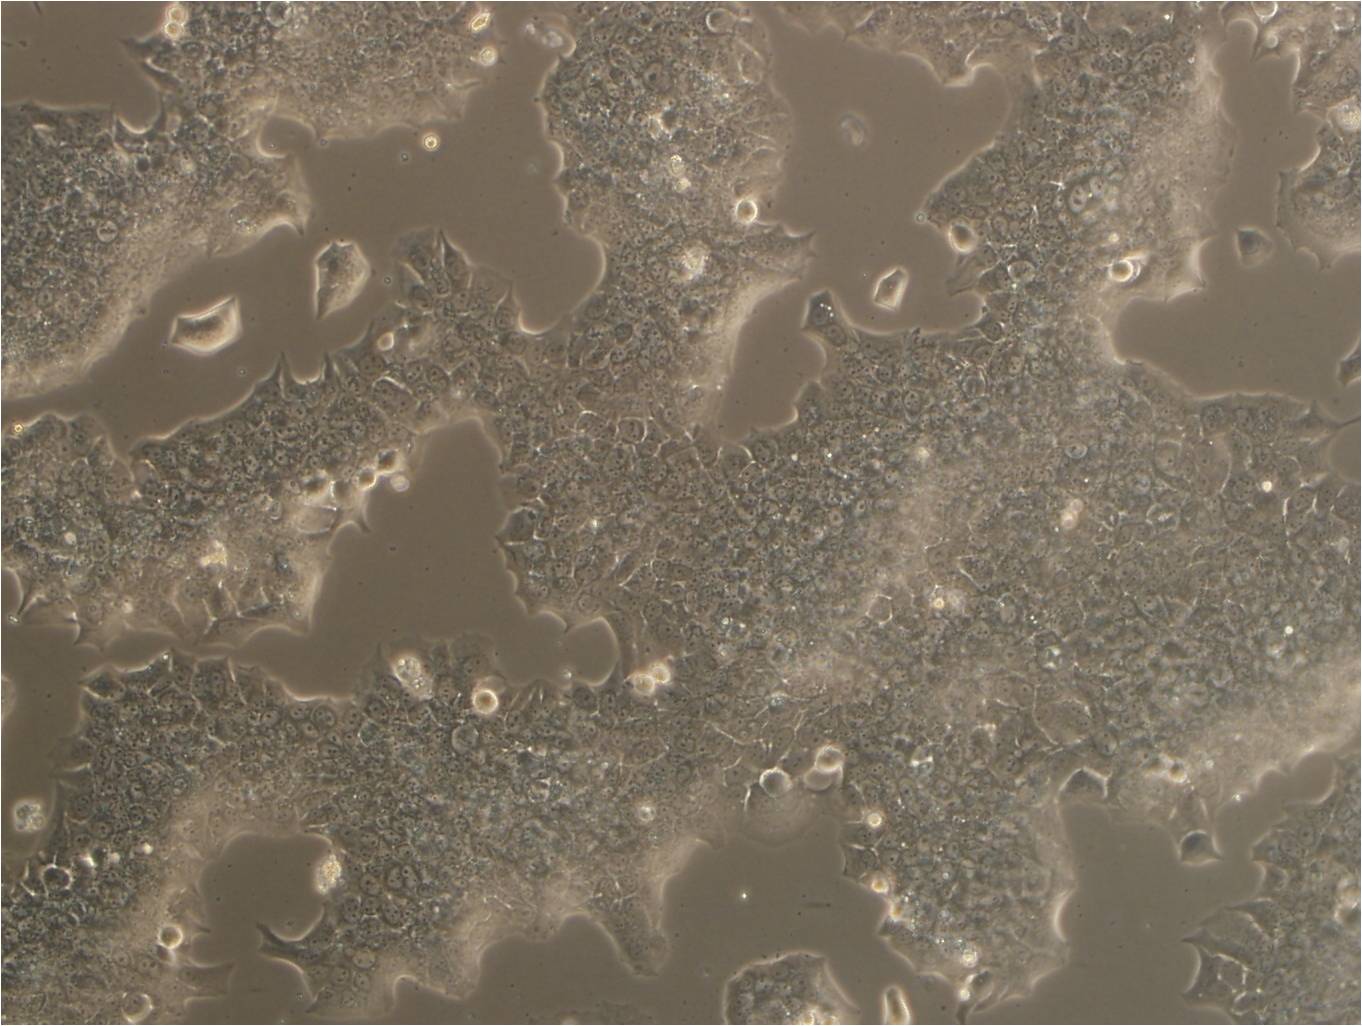 HNE-2 epithelioid cells人鼻咽癌细胞系,HNE-2 epithelioid cells